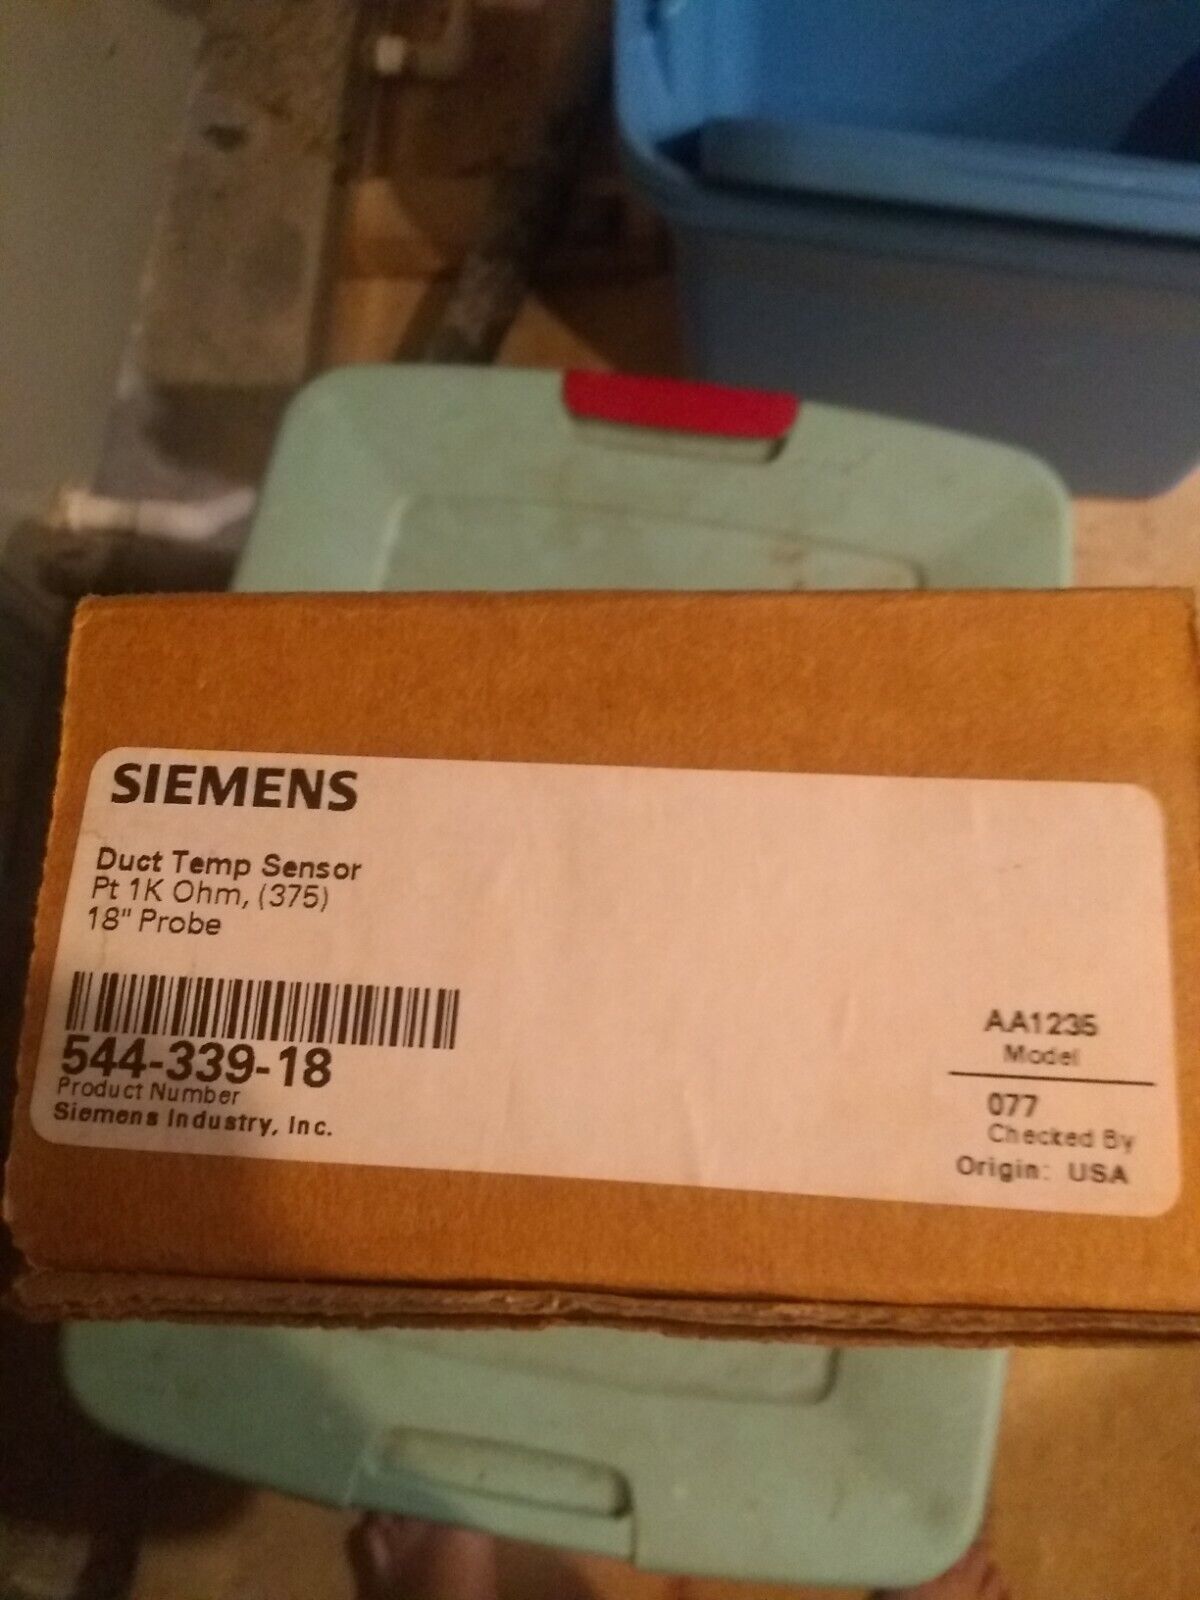 Siemens 544-339-18